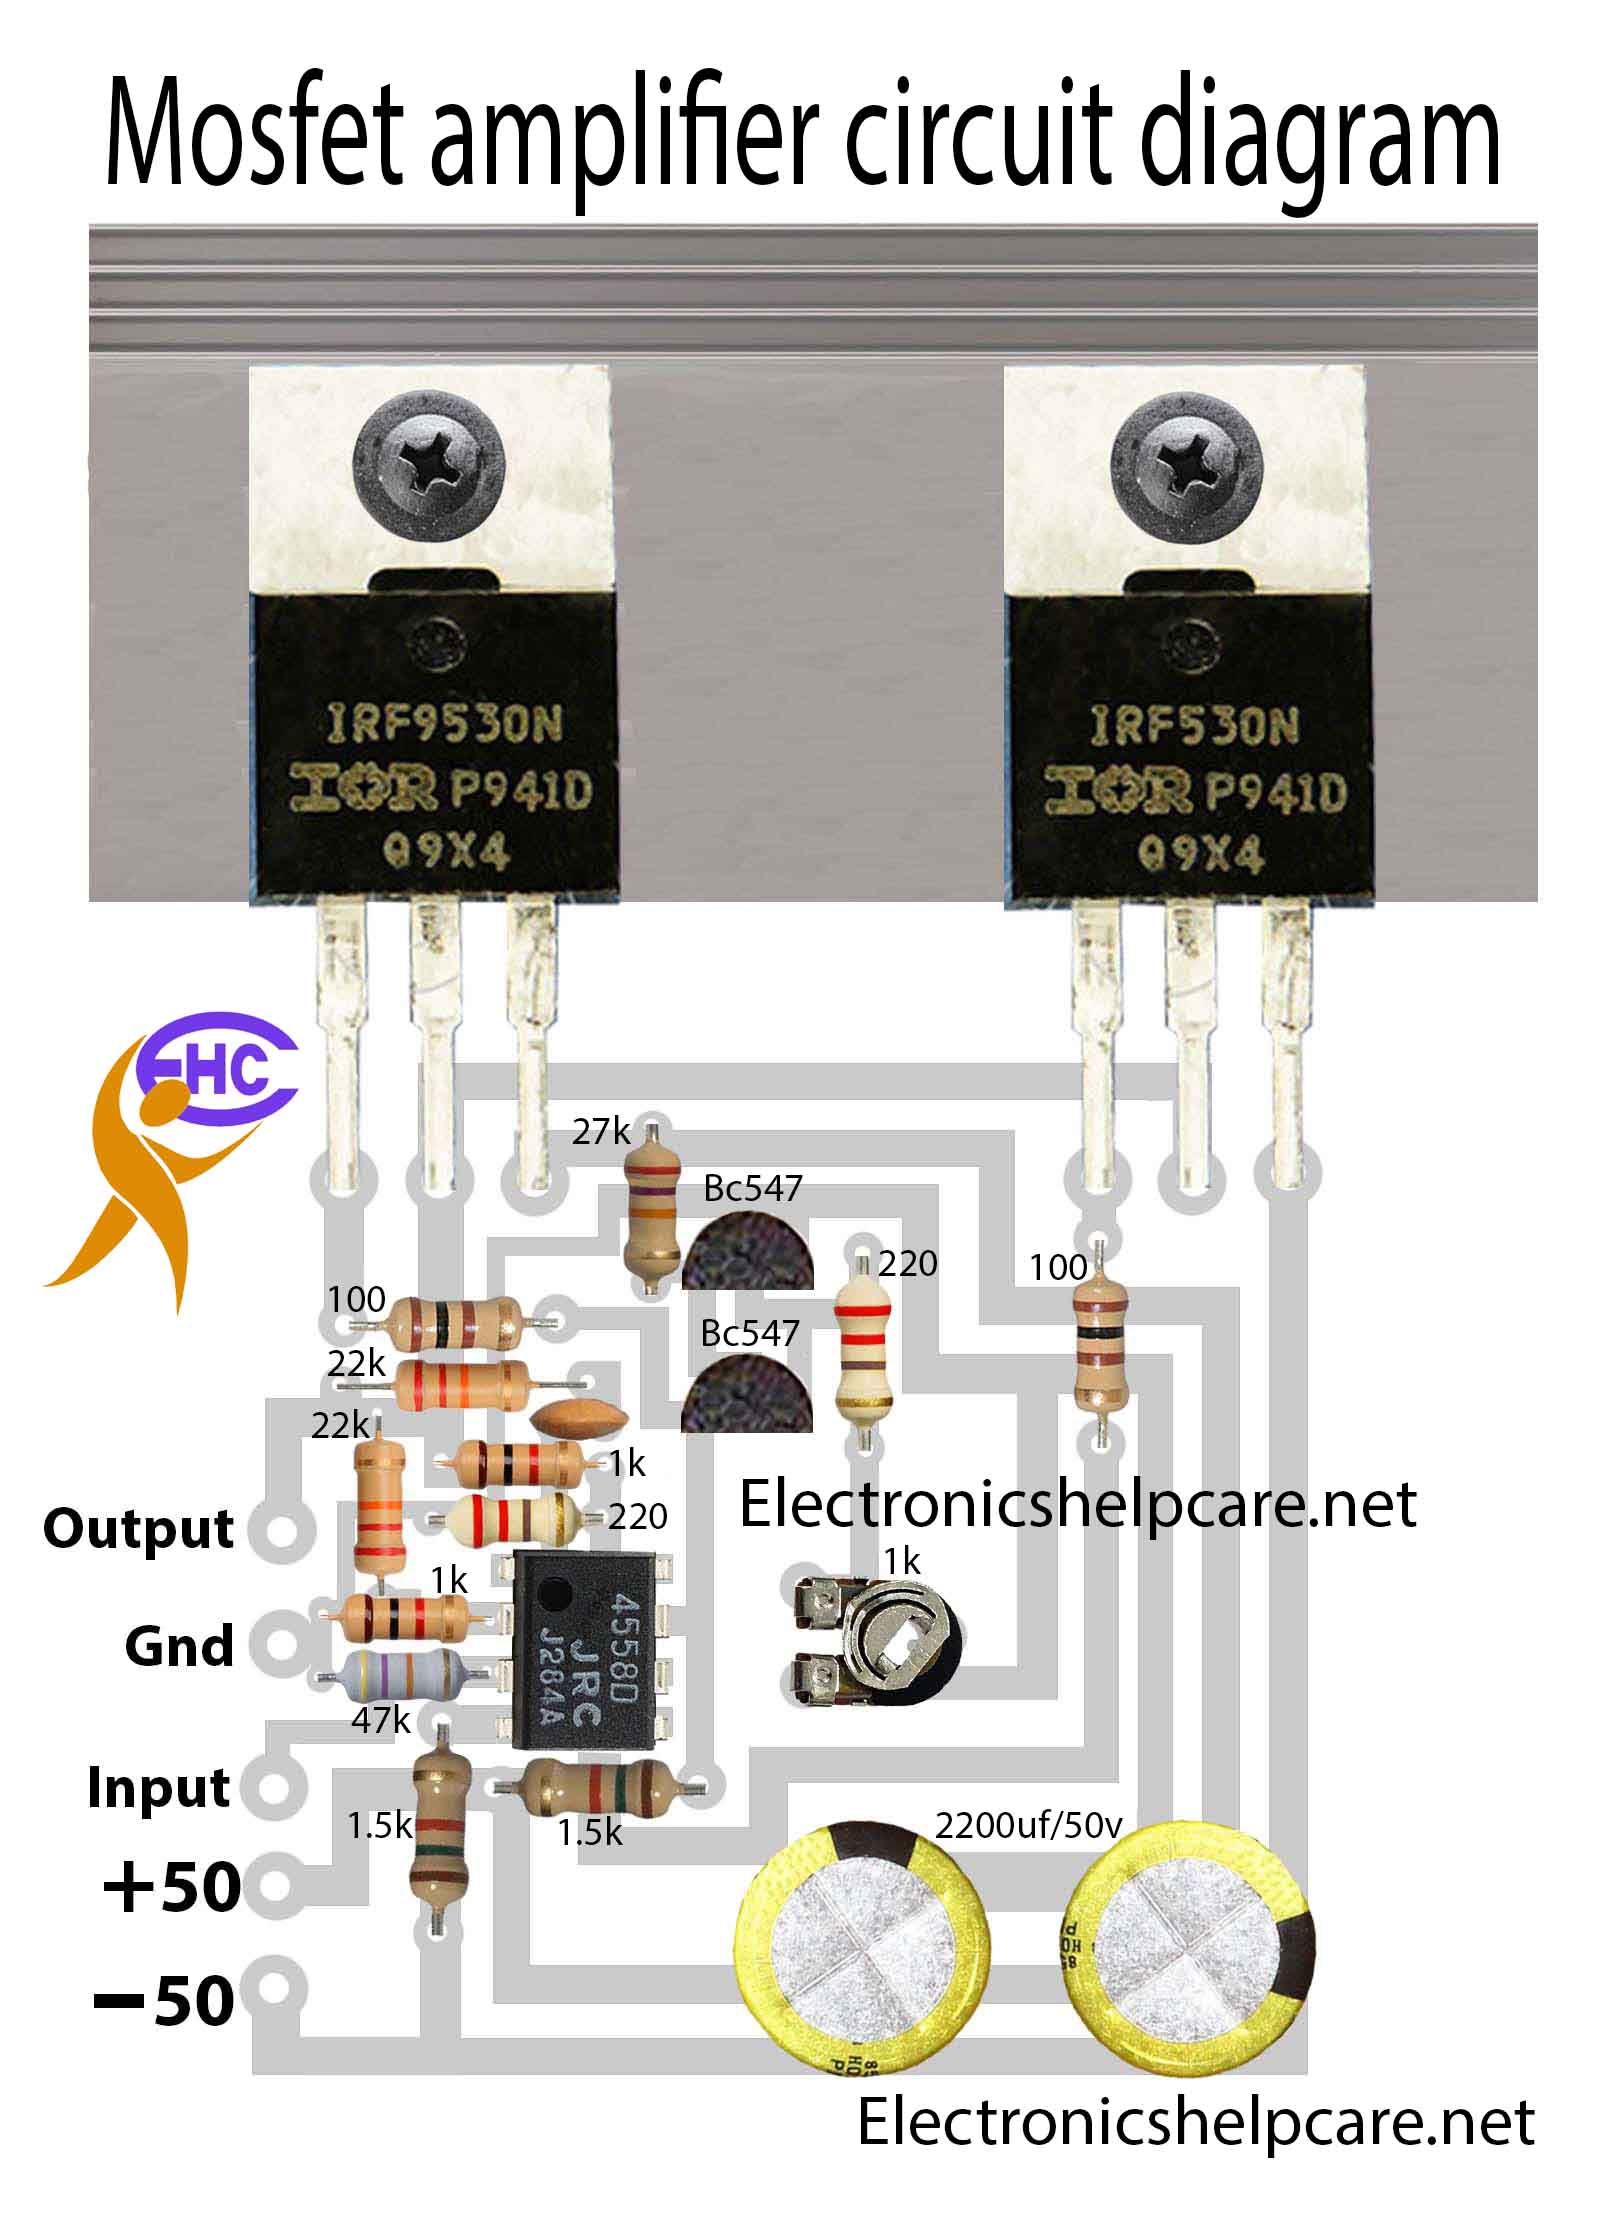 Amplifier circuit diagram using mosfet